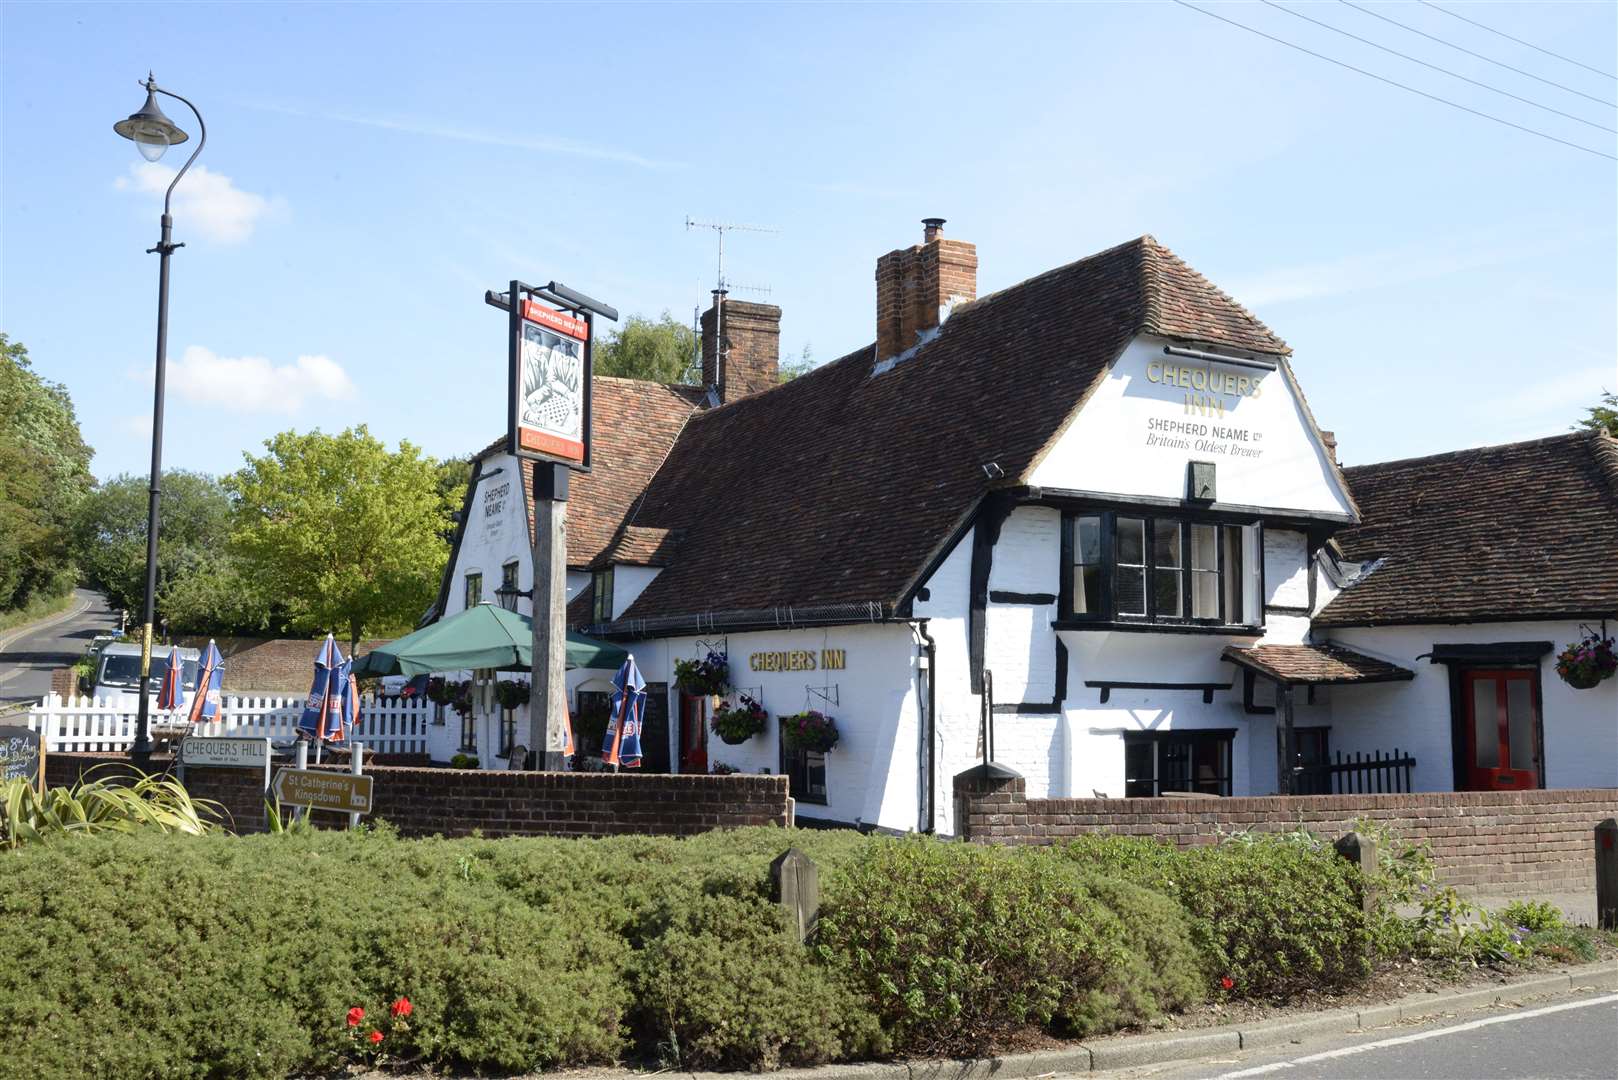 The Chequers Inn, Doddington, near Faversham, pictured in 2015